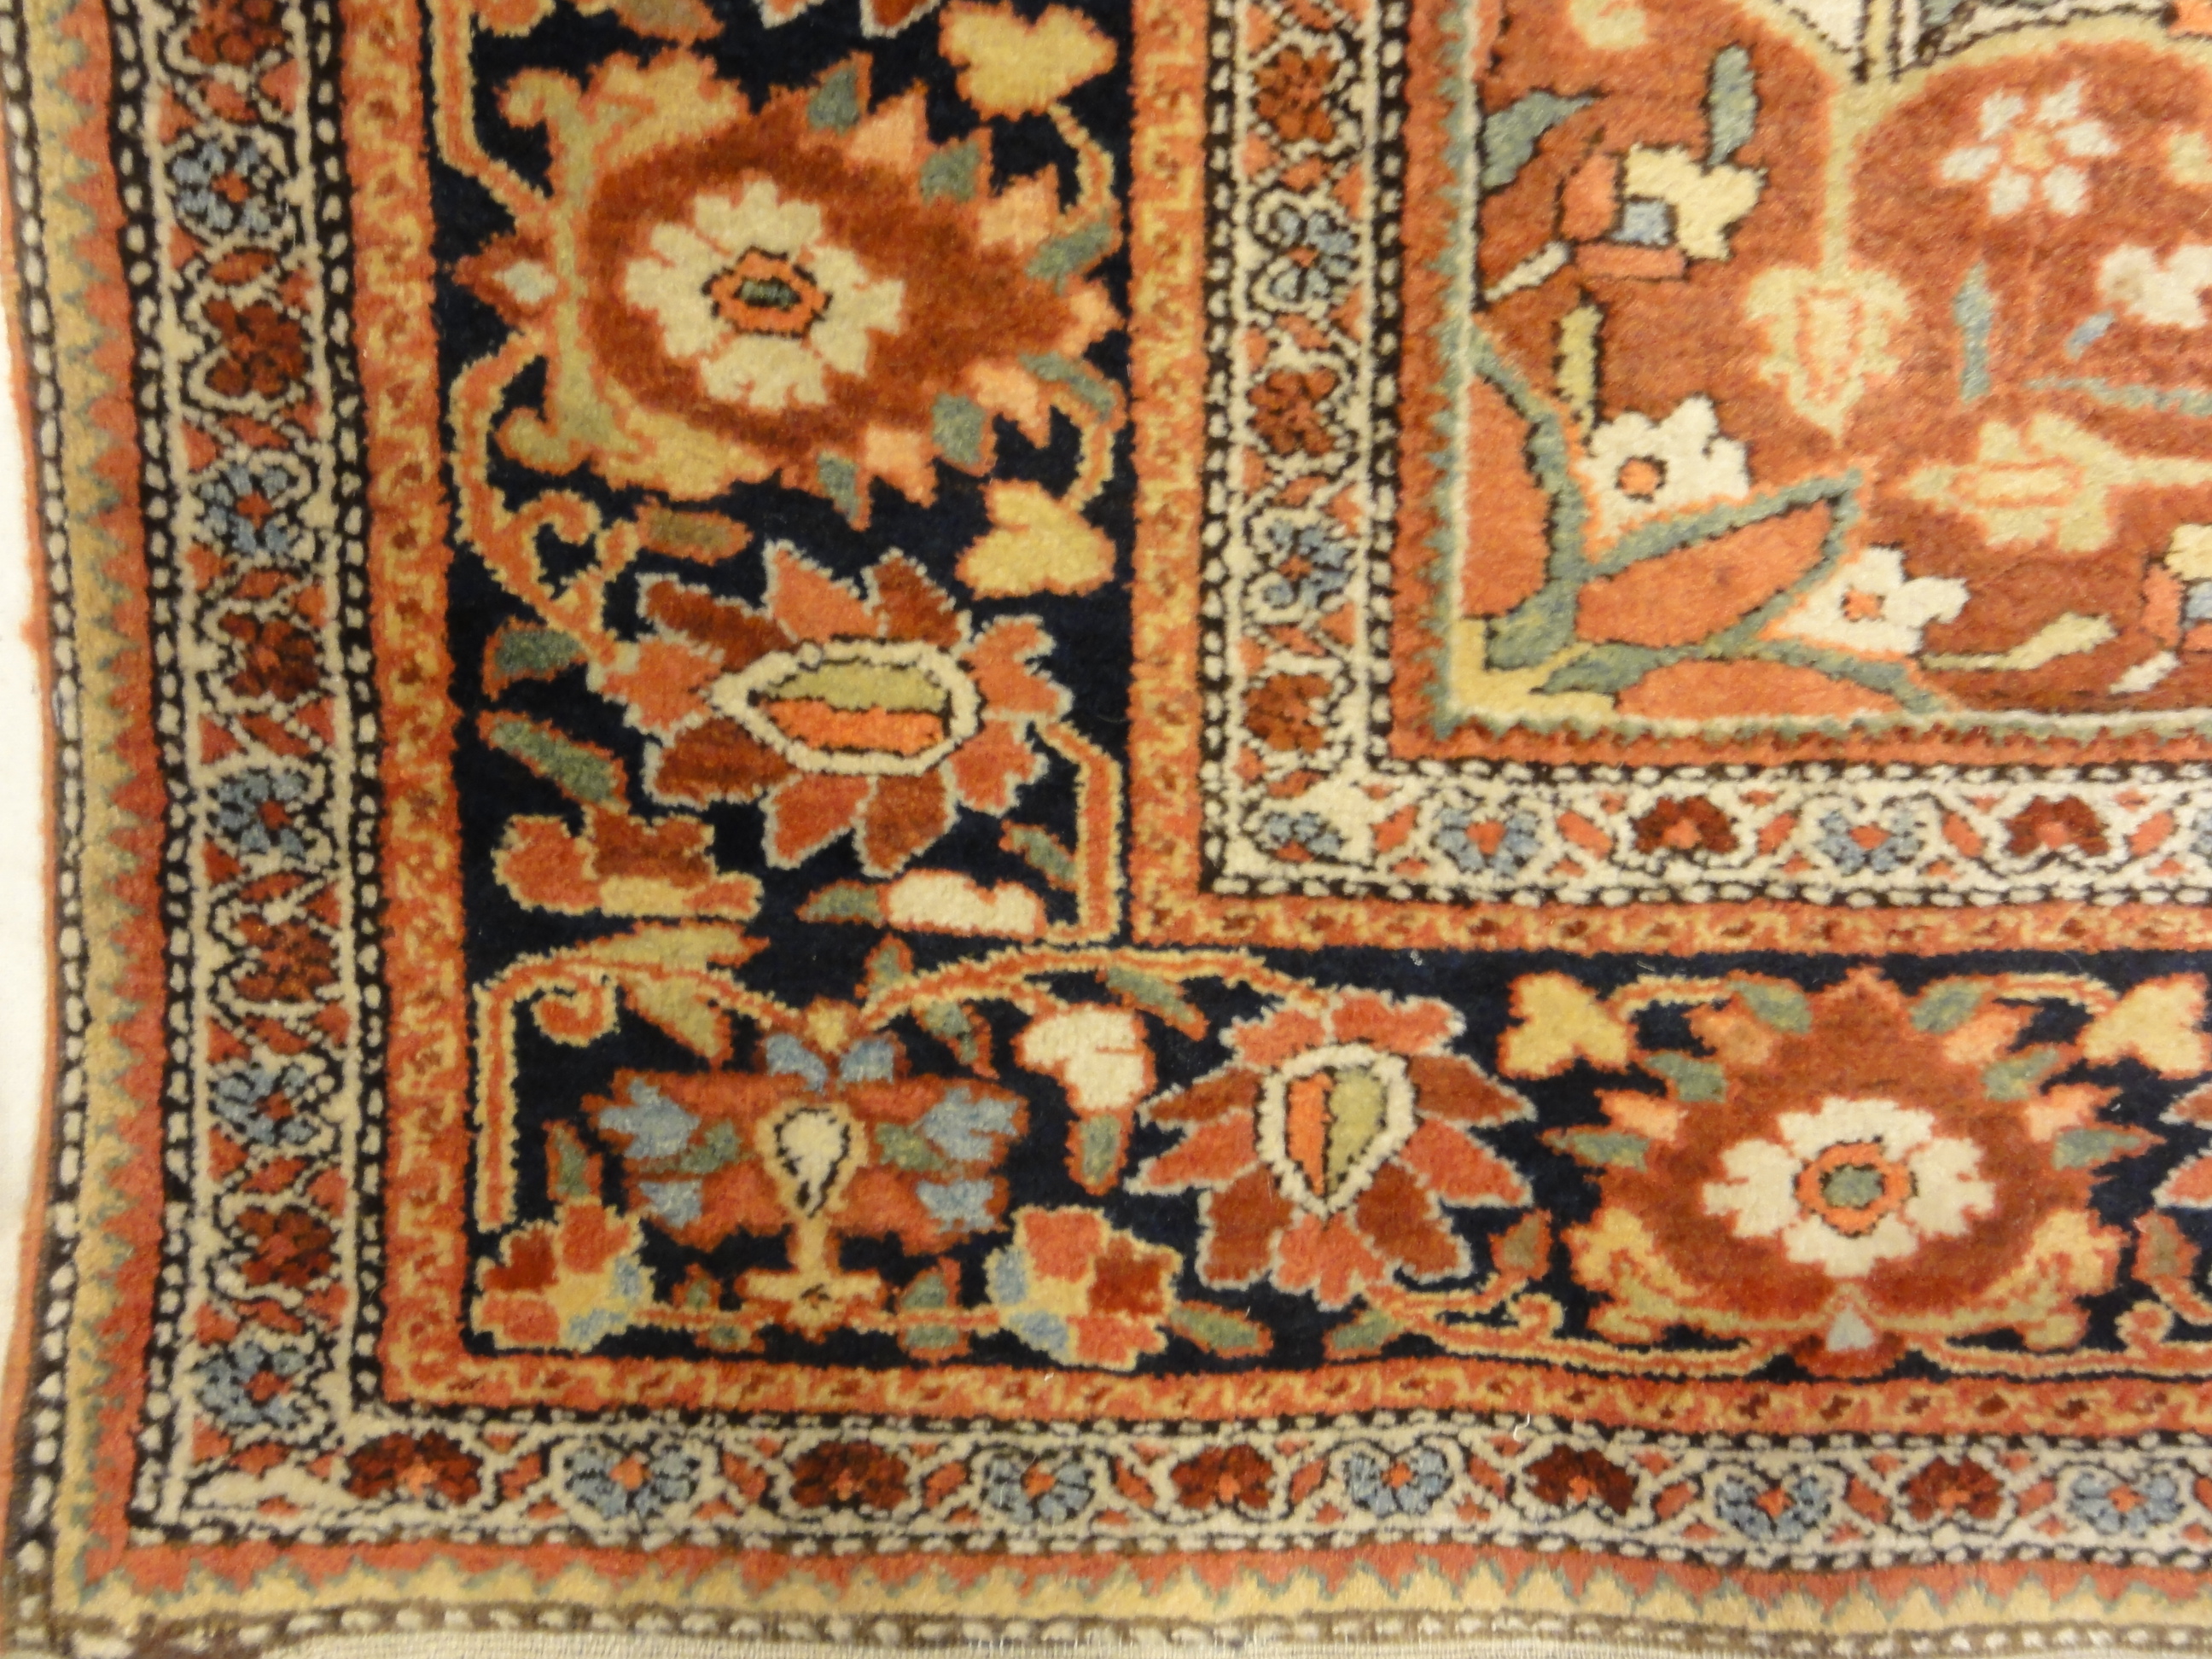 Rare Antique Fine Farahan Circa 1870. A piece of genuine authentic woven carpet art sold by the Santa Barbara Design Center, Rugs and More.